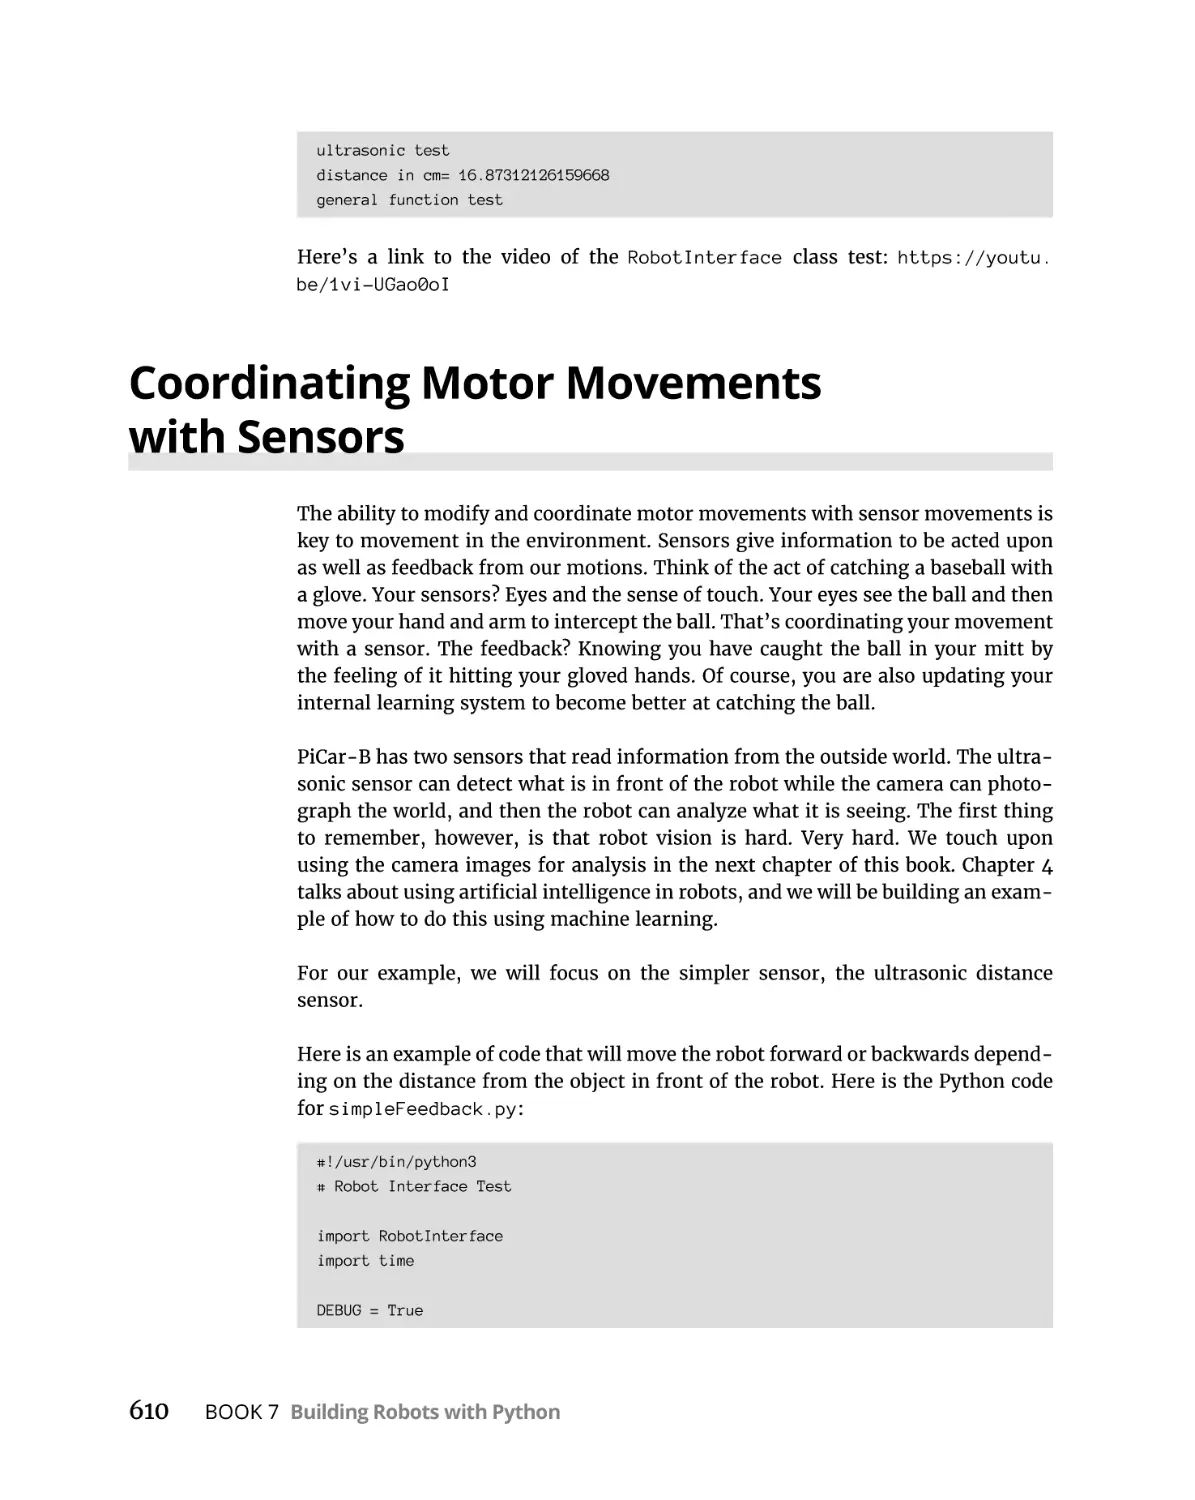 Coordinating Motor Movements with Sensors